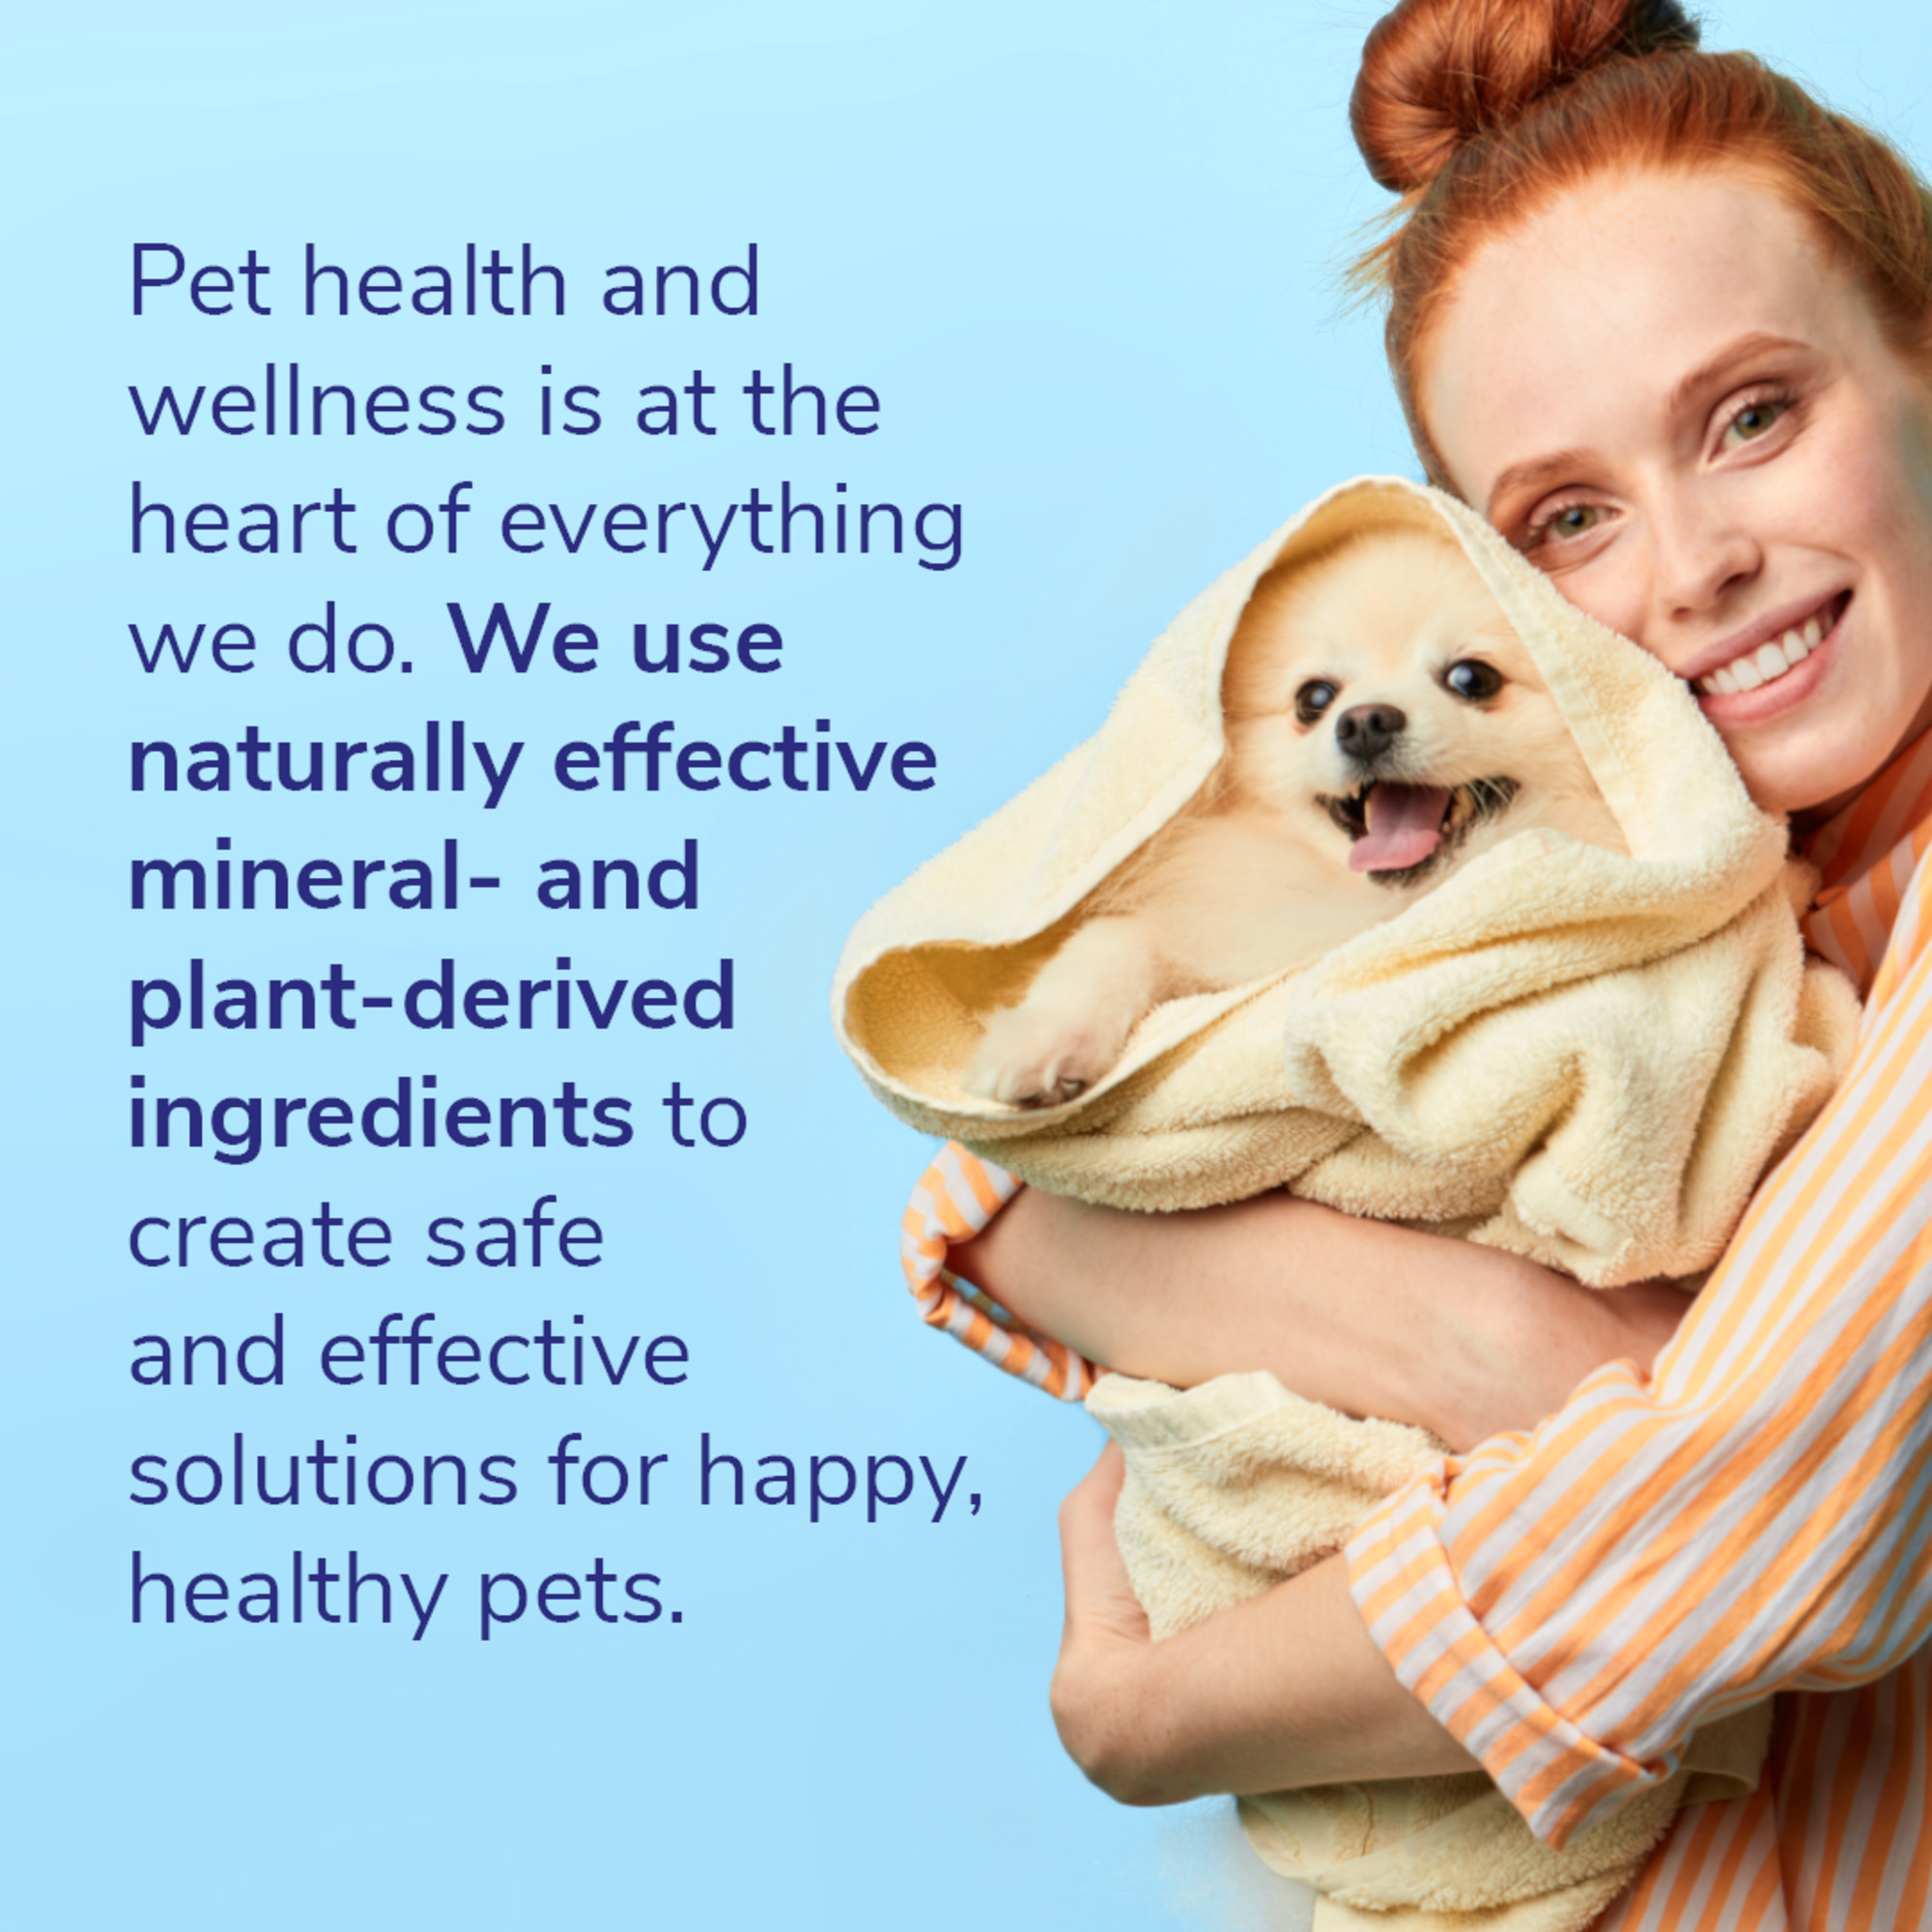 Odor Control Refreshing Shampoo for Pets